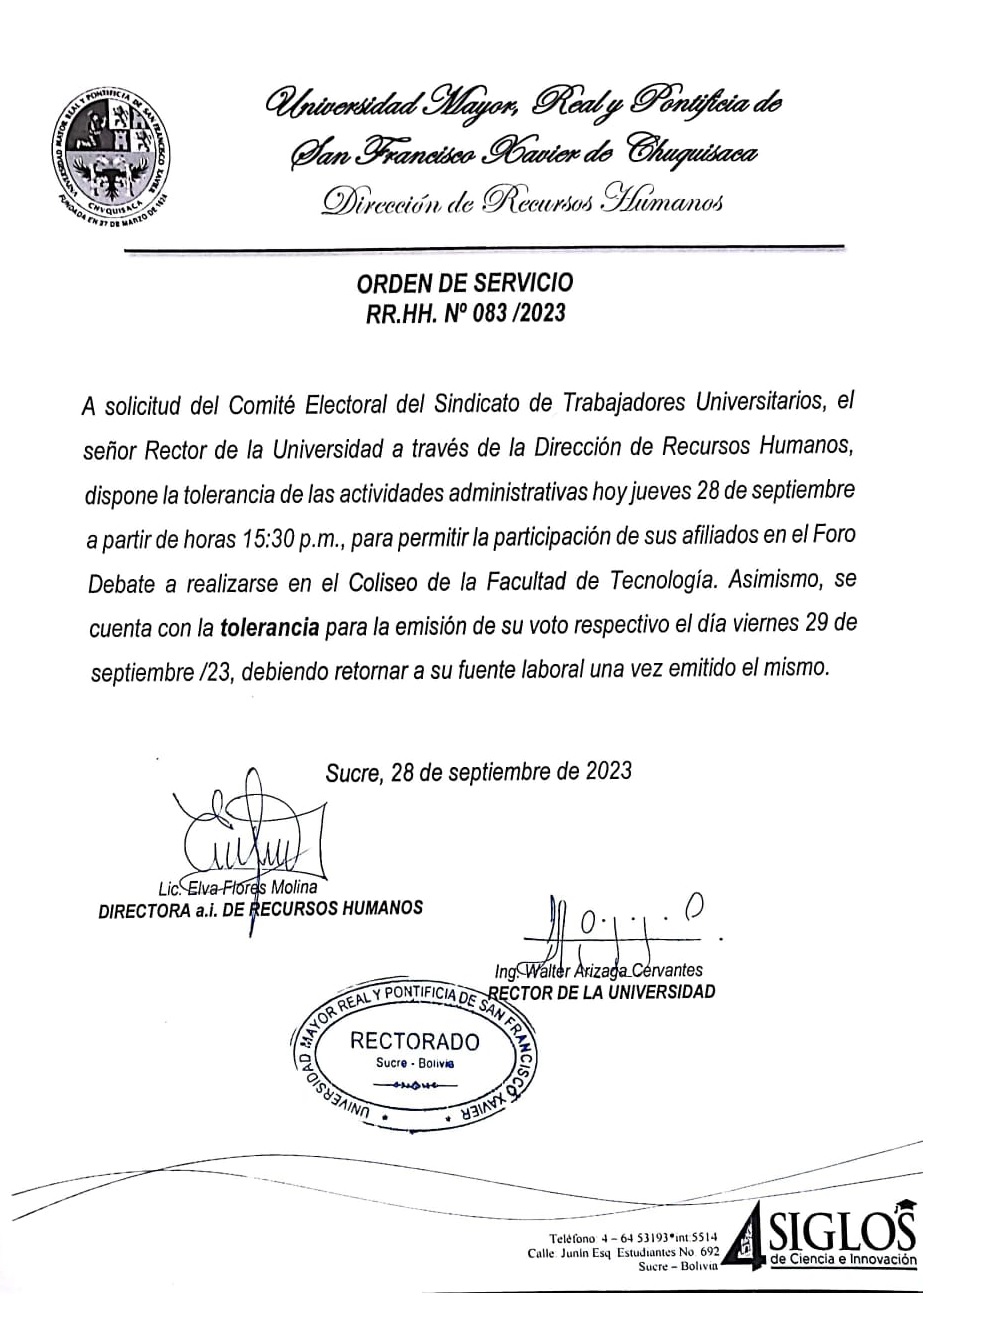 ORDEN DE SERVICIO RR.HH. Nº 083/2023, TOLERANCIA ACTIVIDADES ADMINISTRATIVAS, FORO DEBATE.